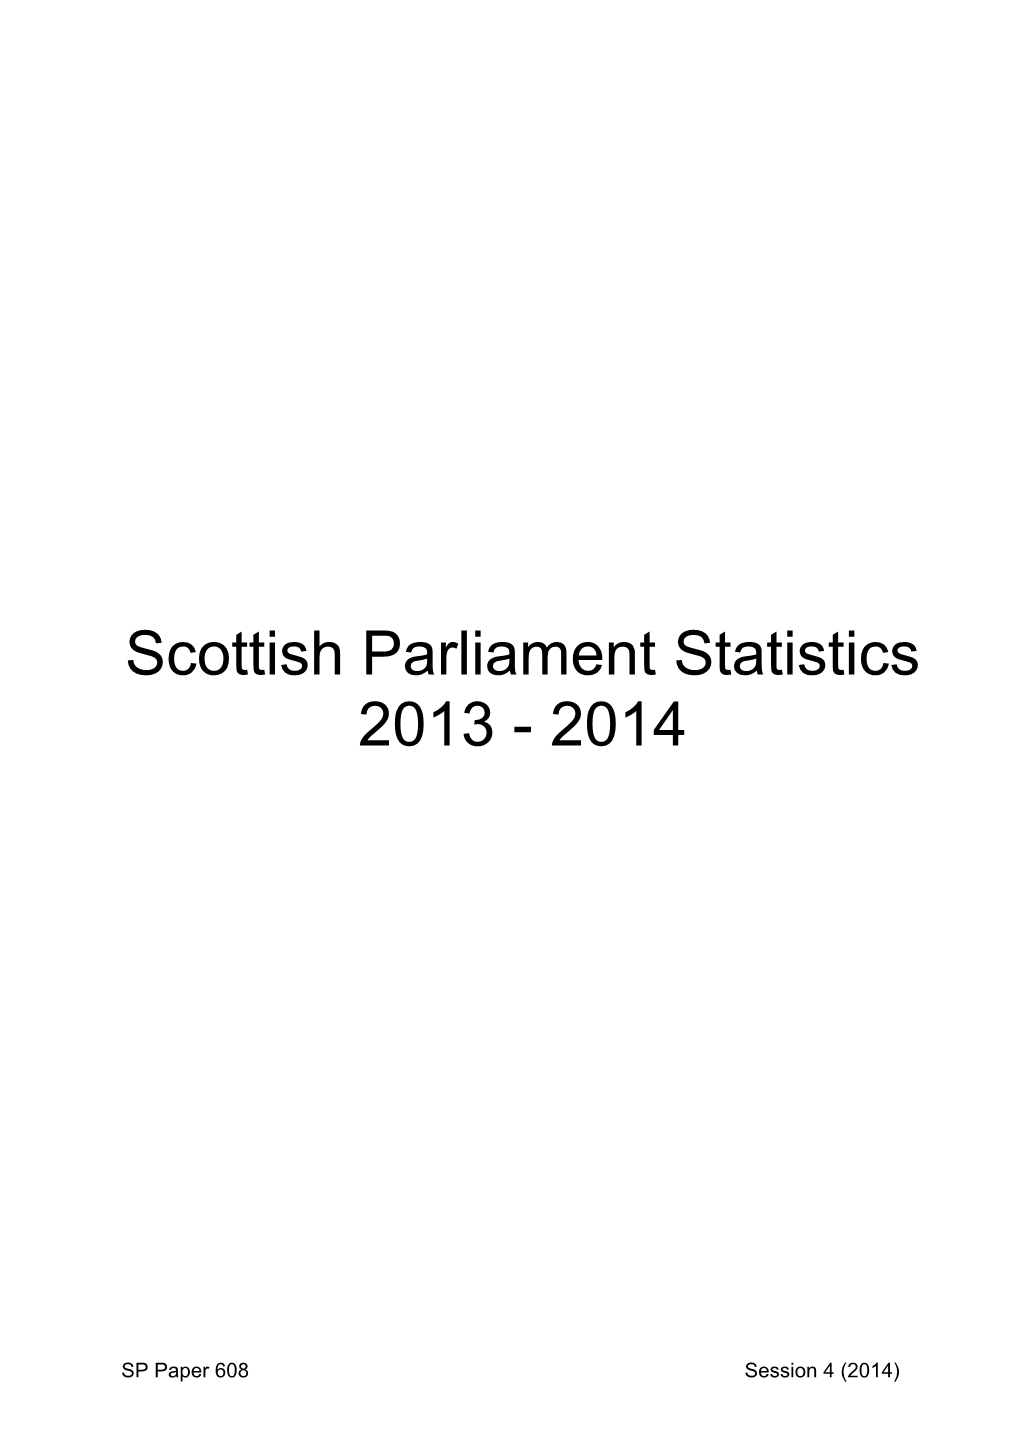 Scottish Parliament Statistics 2013-14